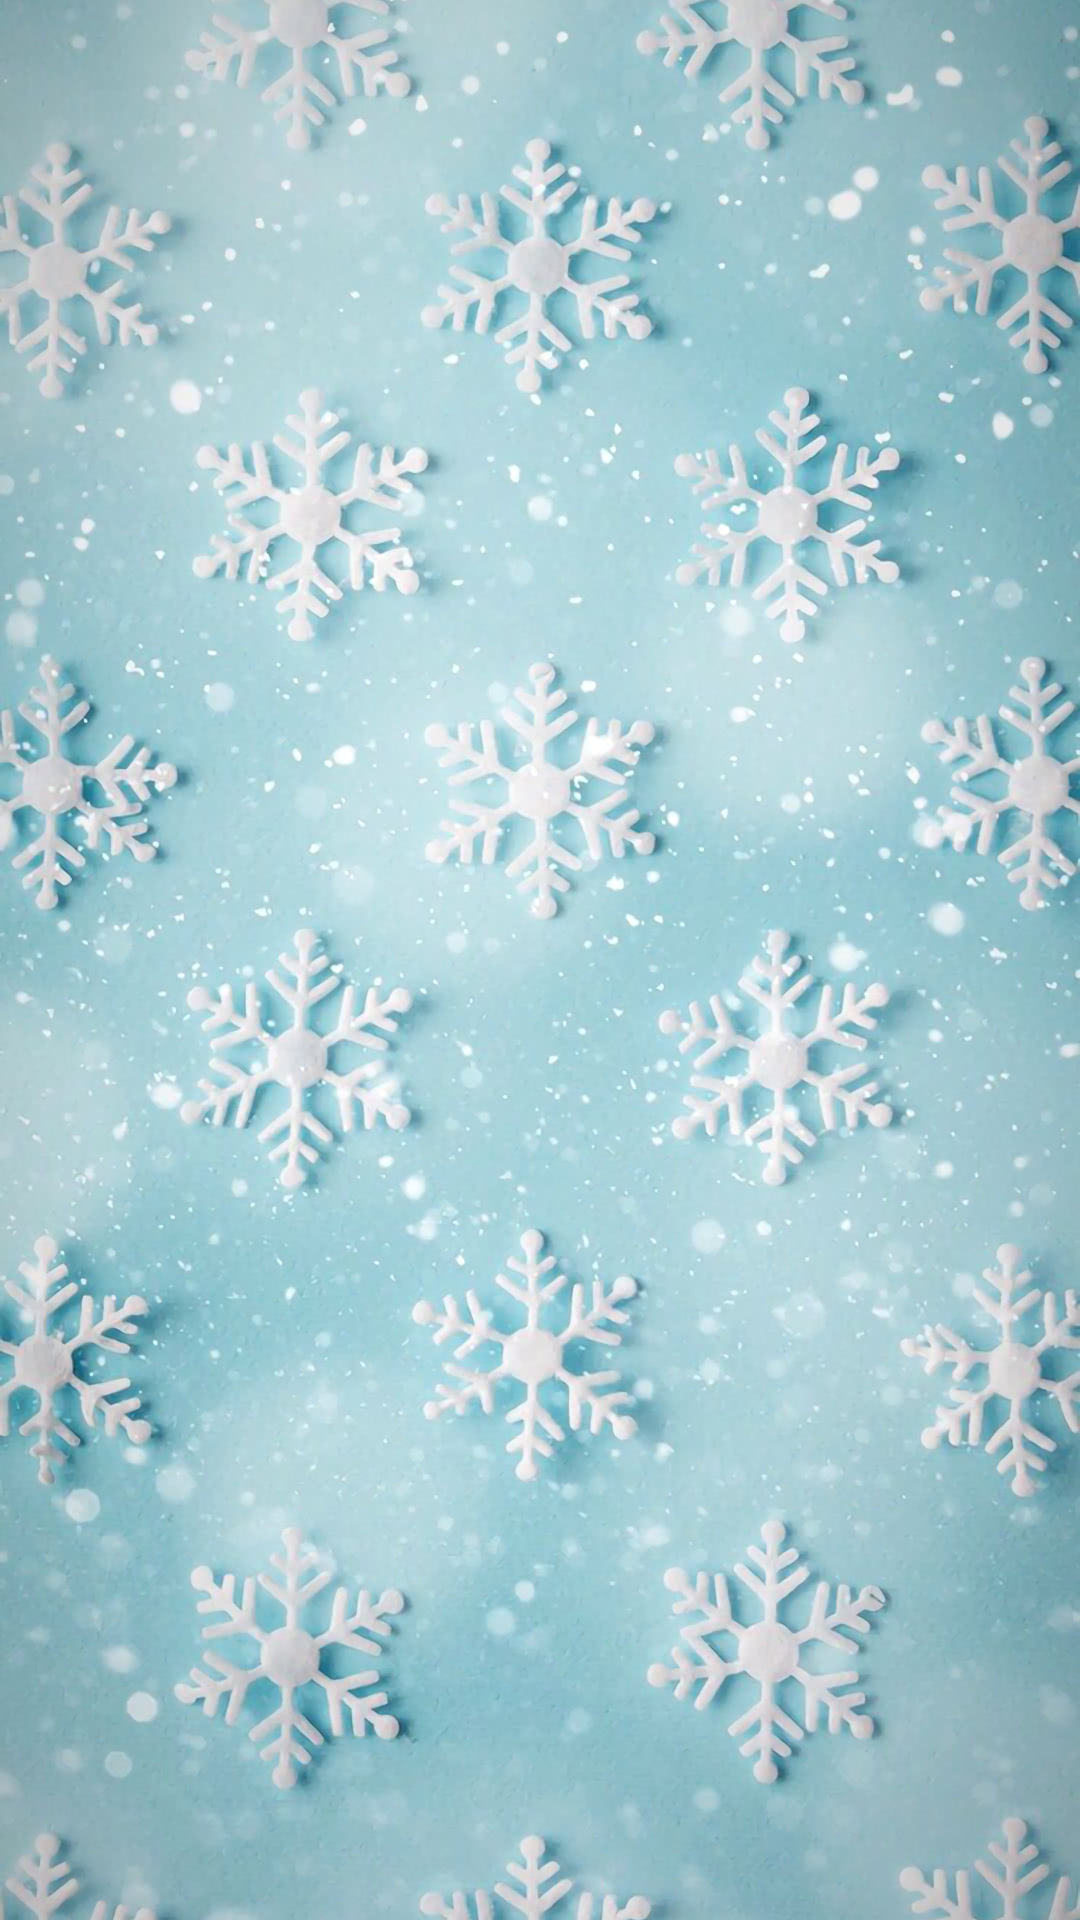 Snowflakes on a blue background - Snowflake